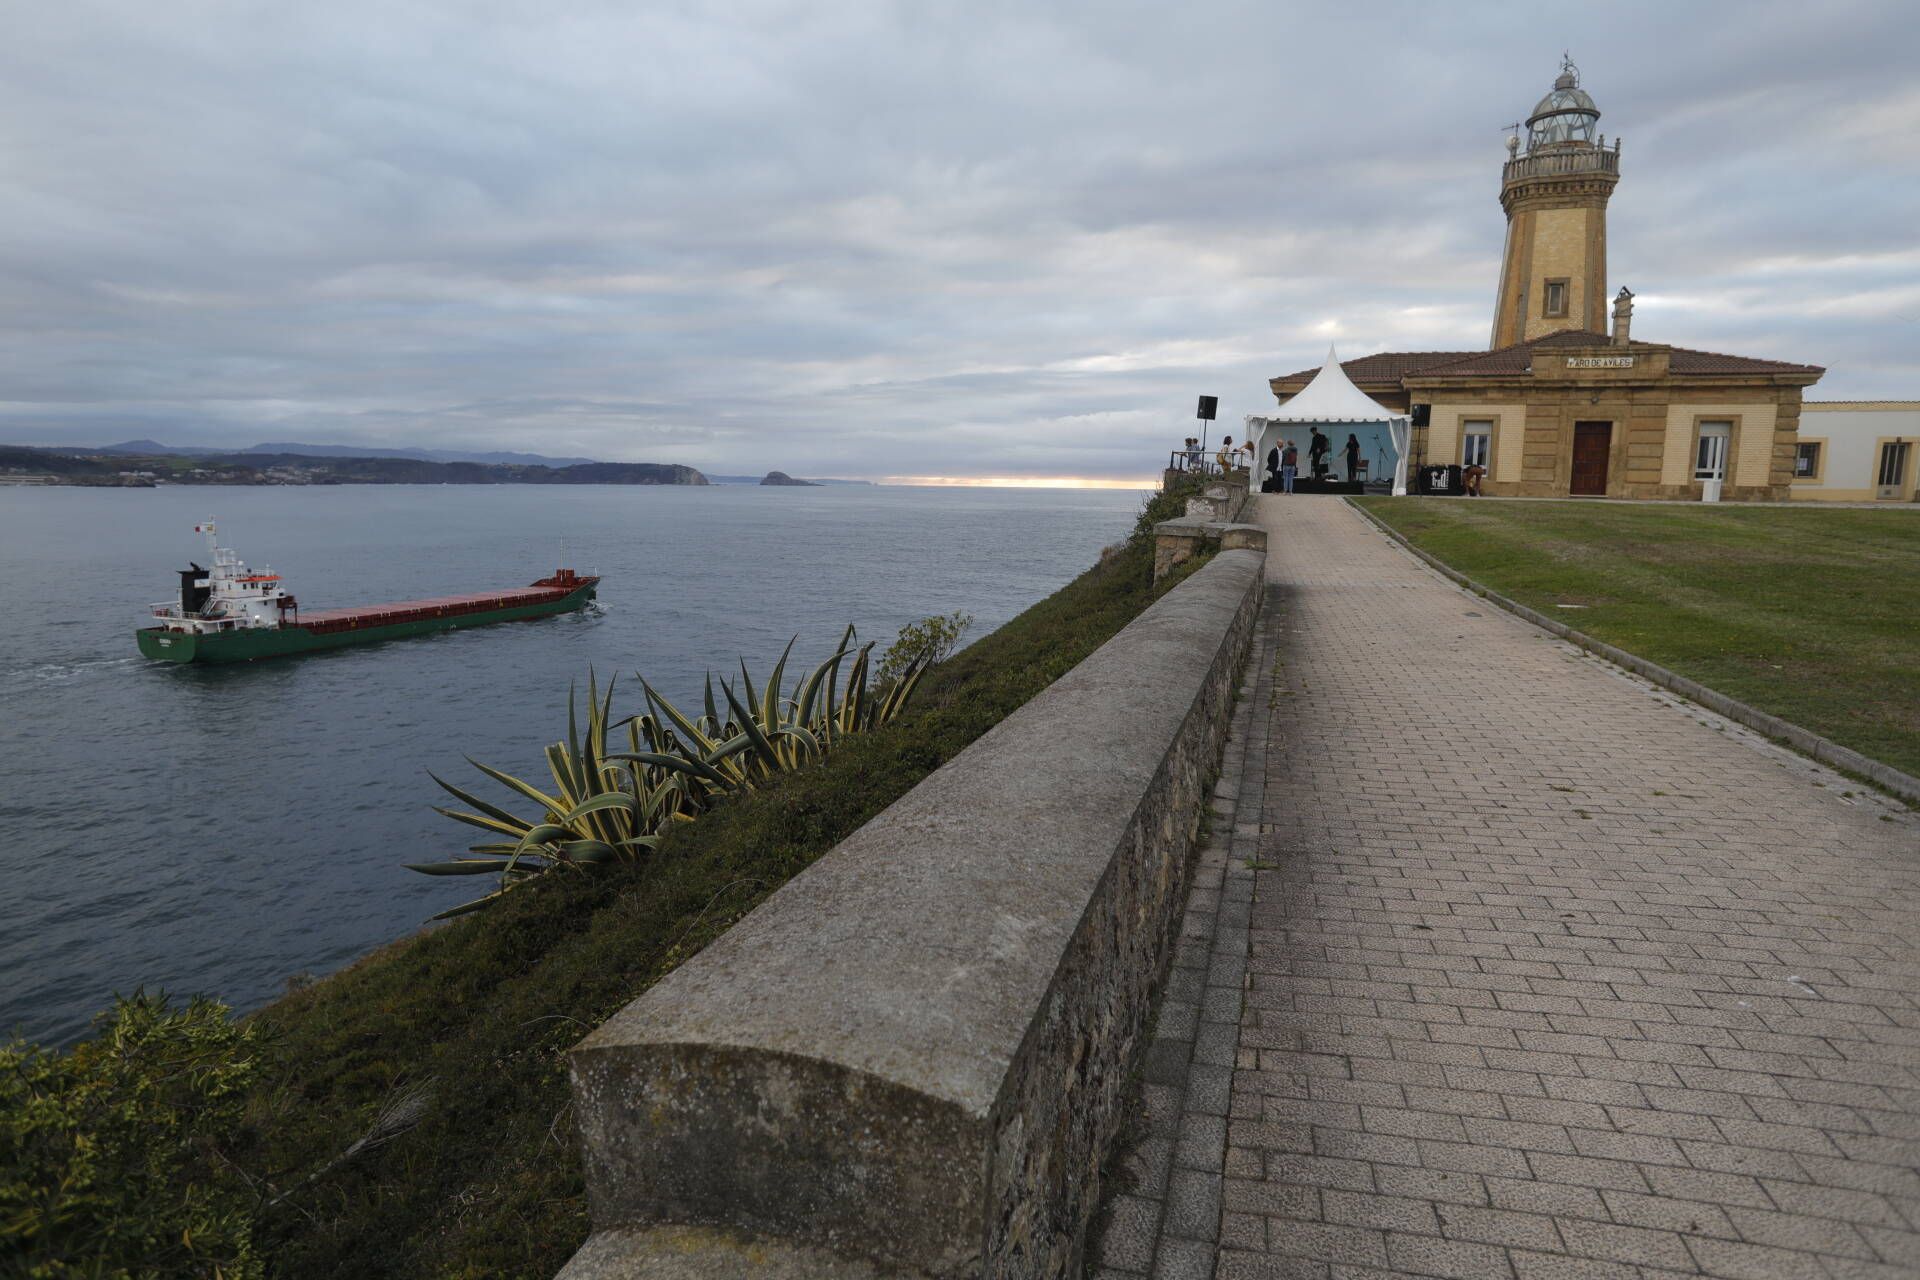 El Faro de Avilés celebra su 160º aniversario